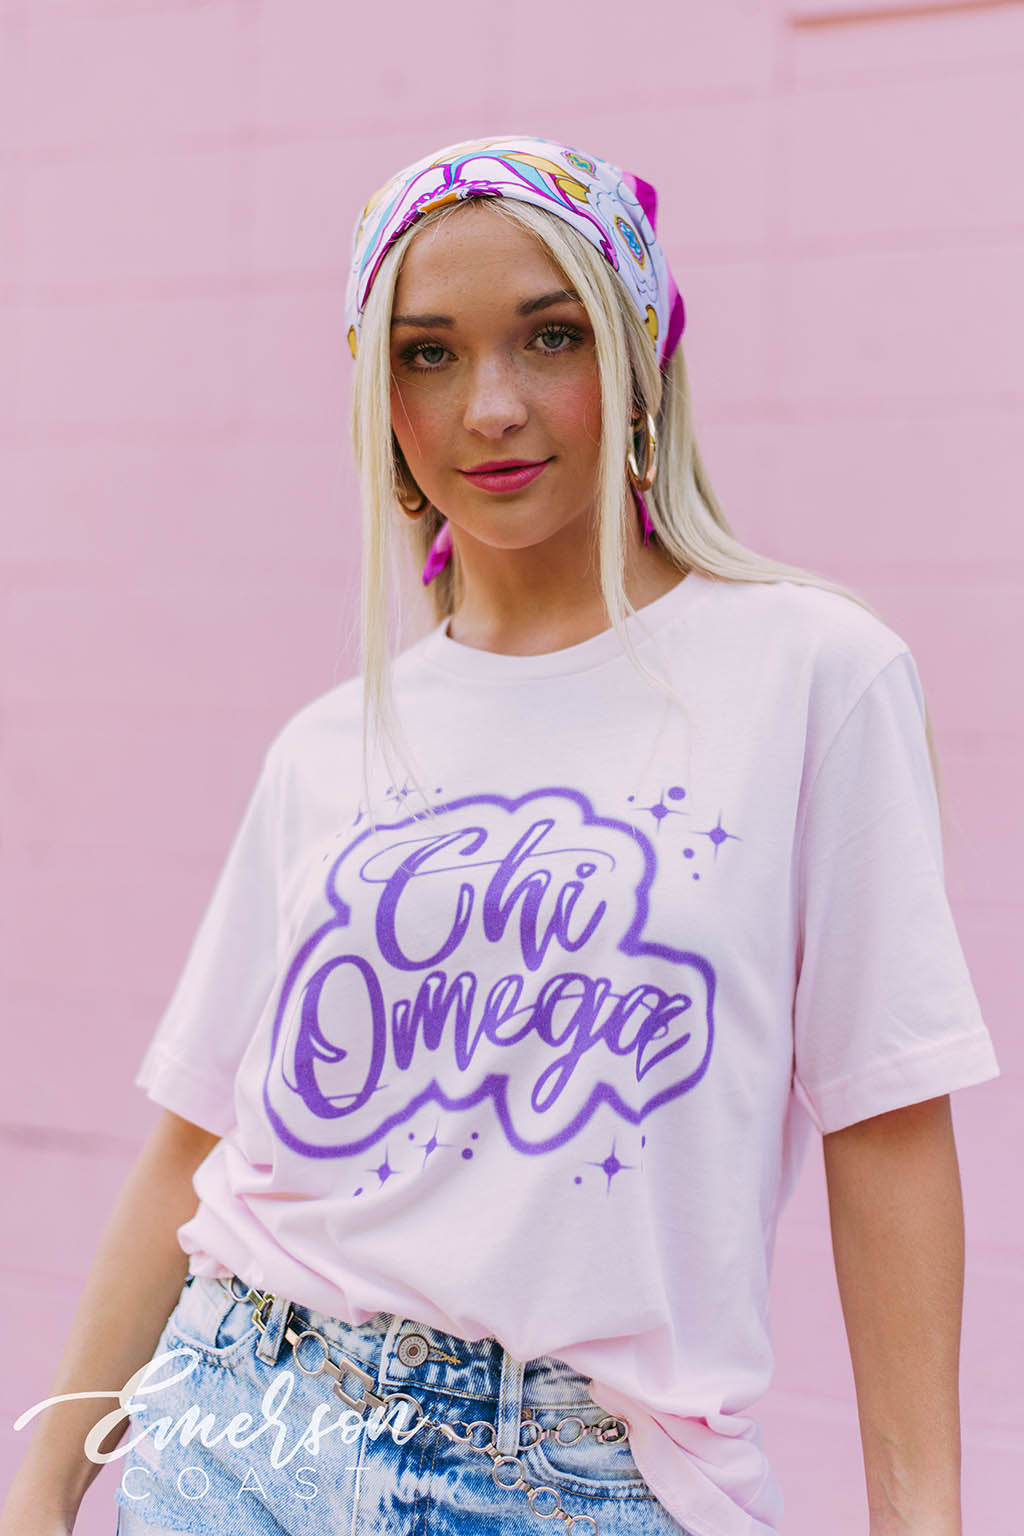 Chi Omega Airbrush Tshirt